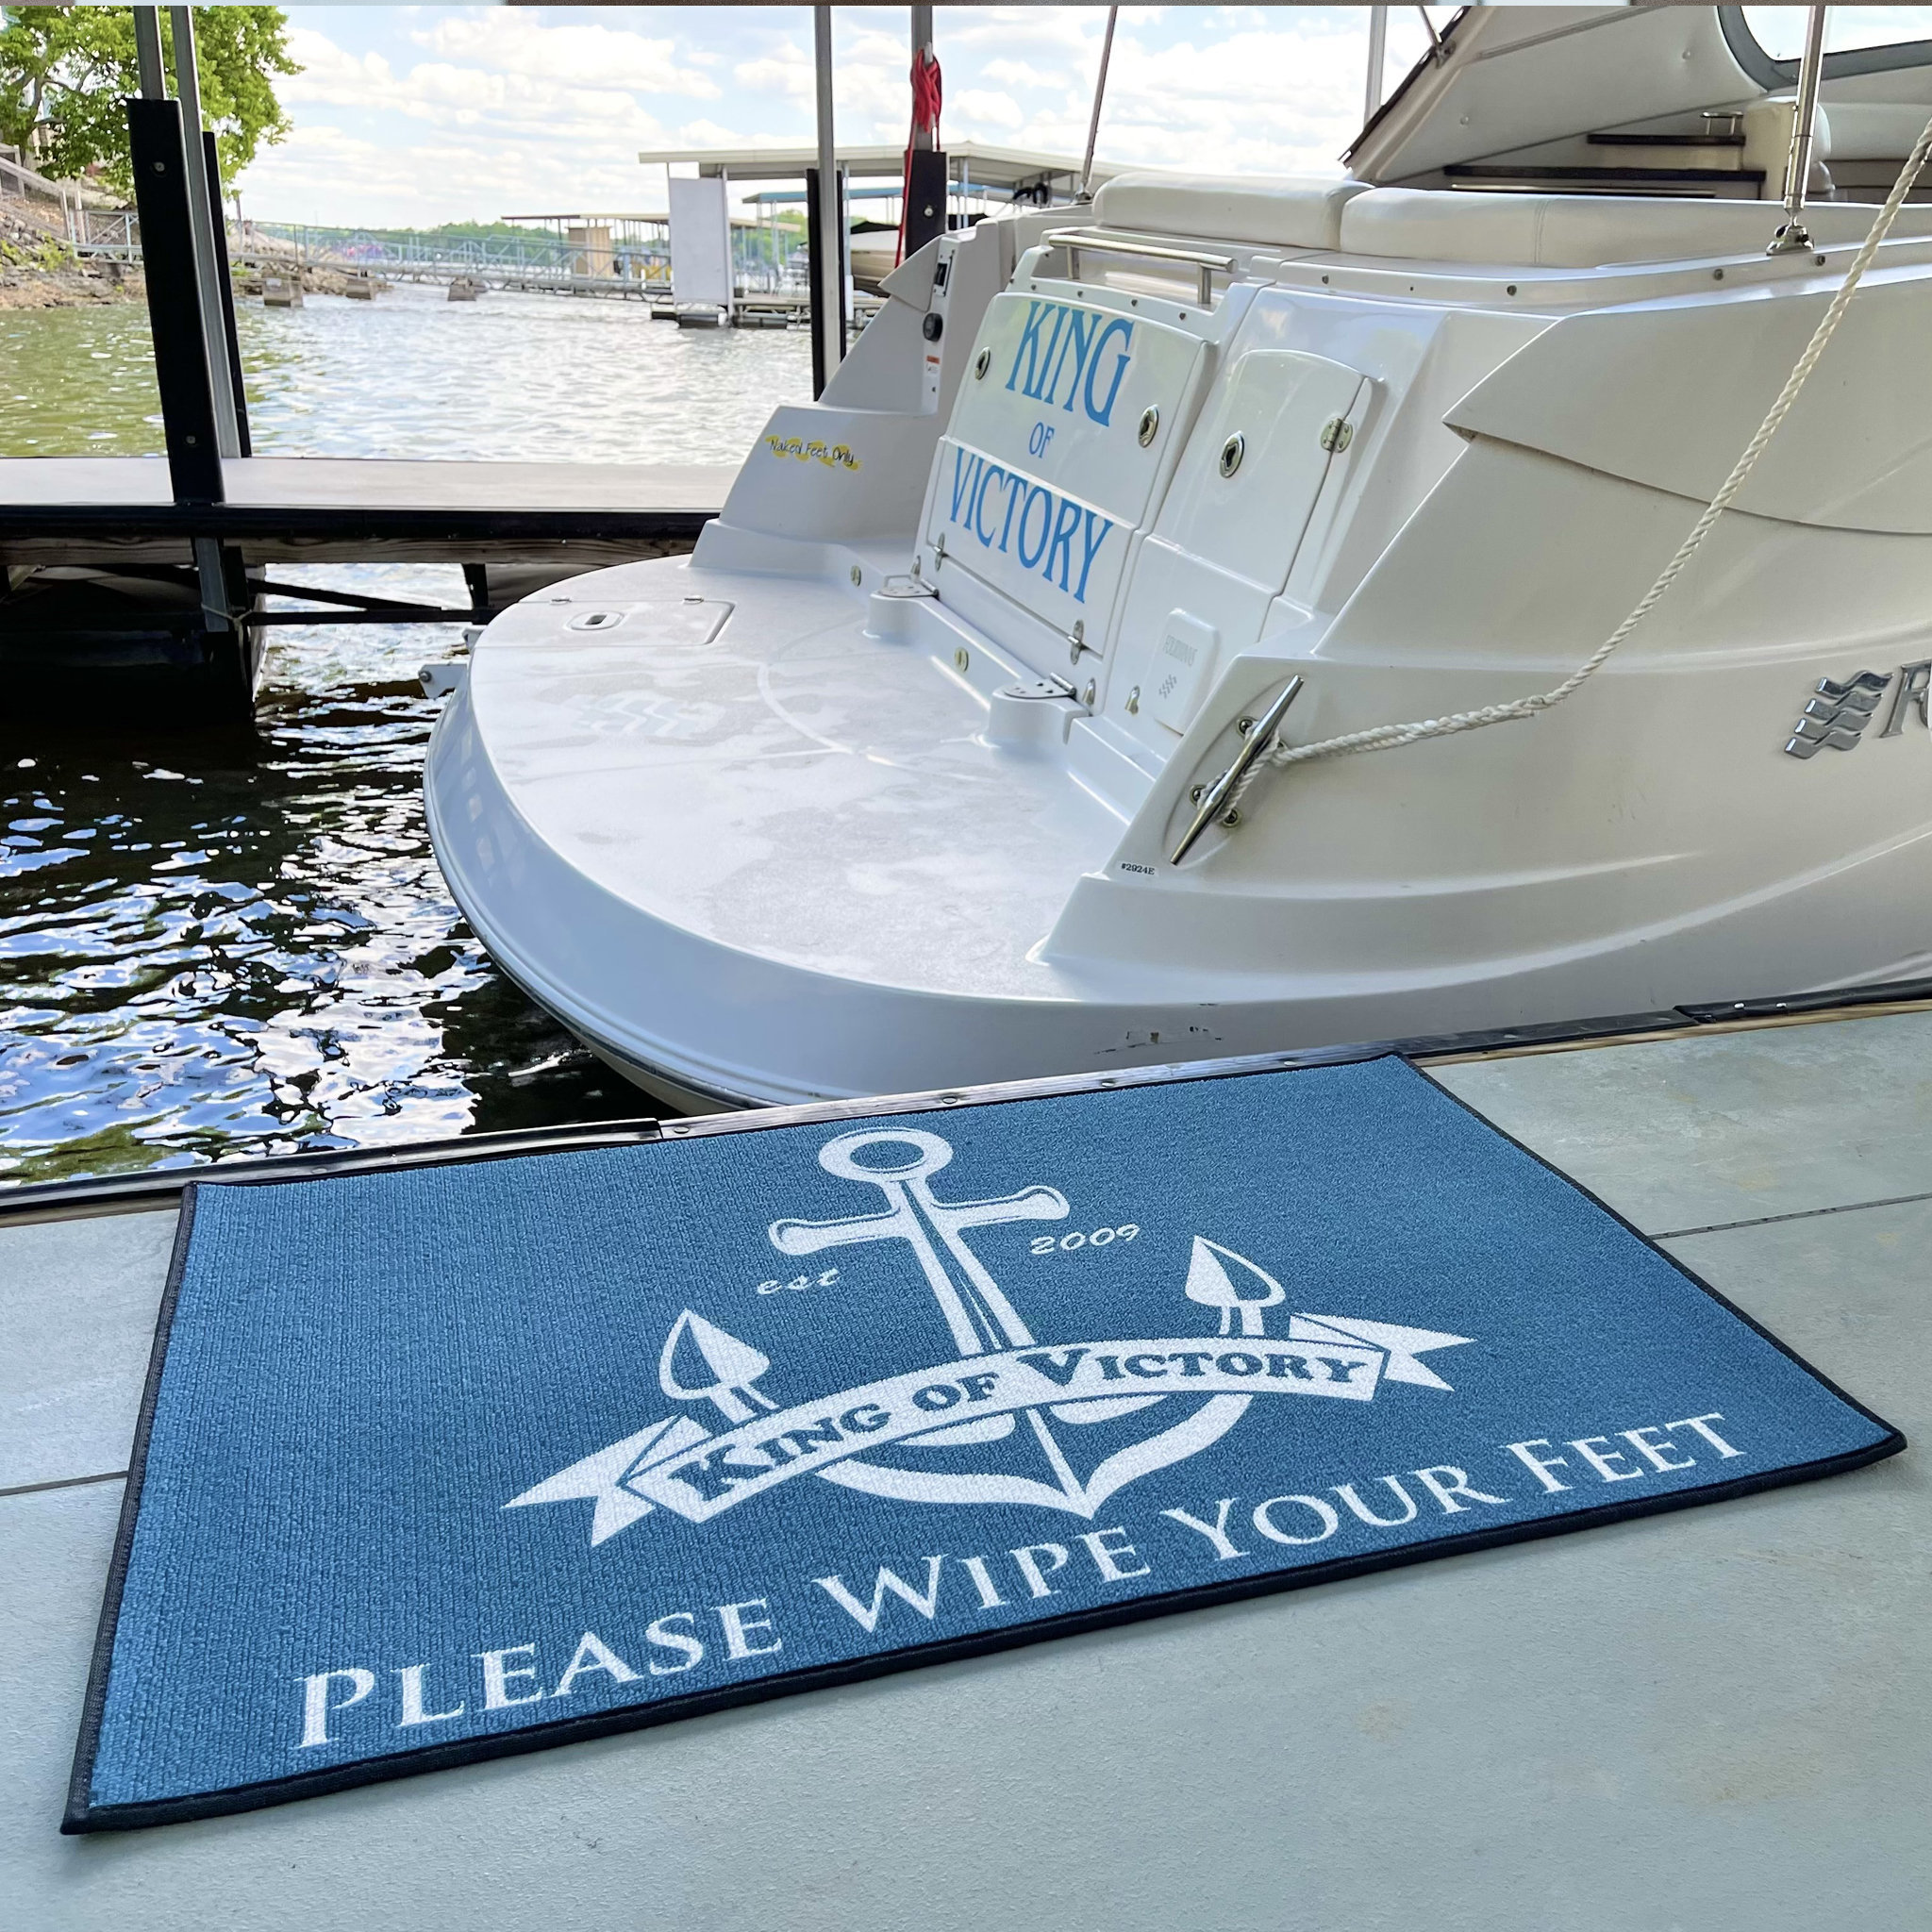 Personalised boat mat, Sailing yacht, narrow boat, blue door mat 60 x 40 cm